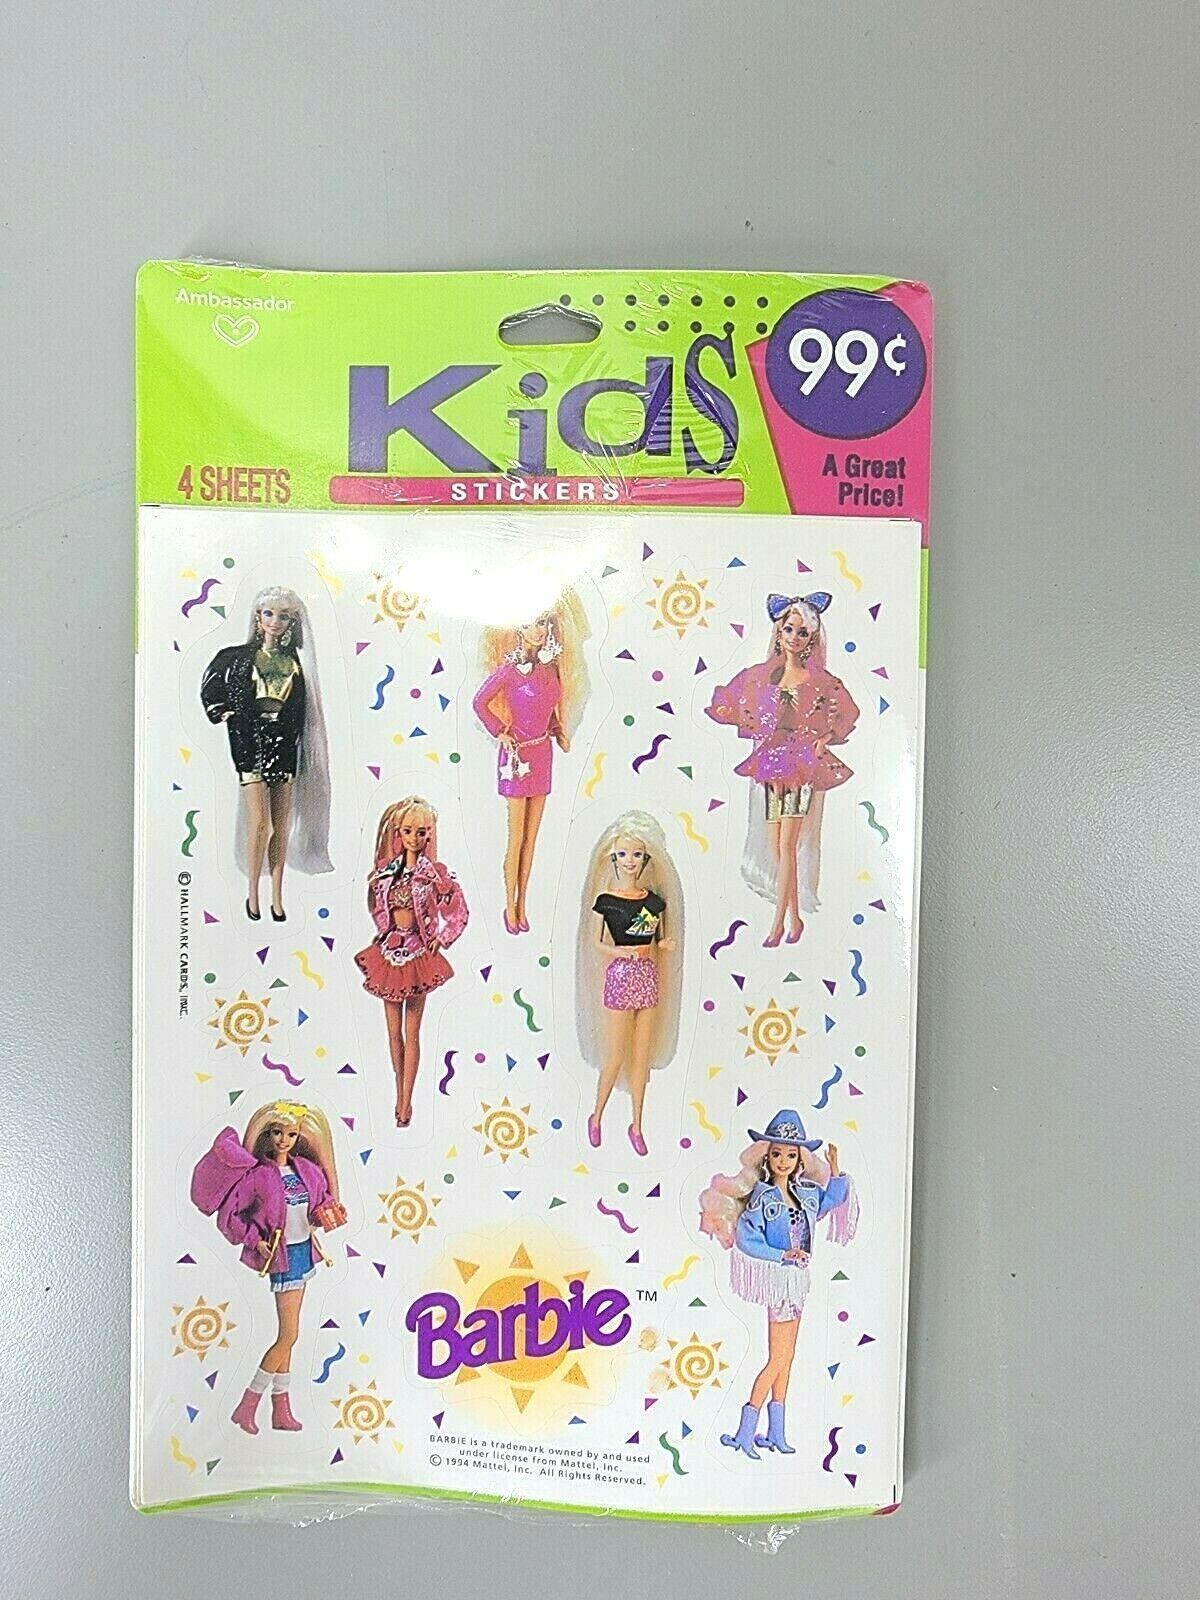 Vintage Ambassador Hallmark Barbie Kids Stickers 4 sheets - $8.99